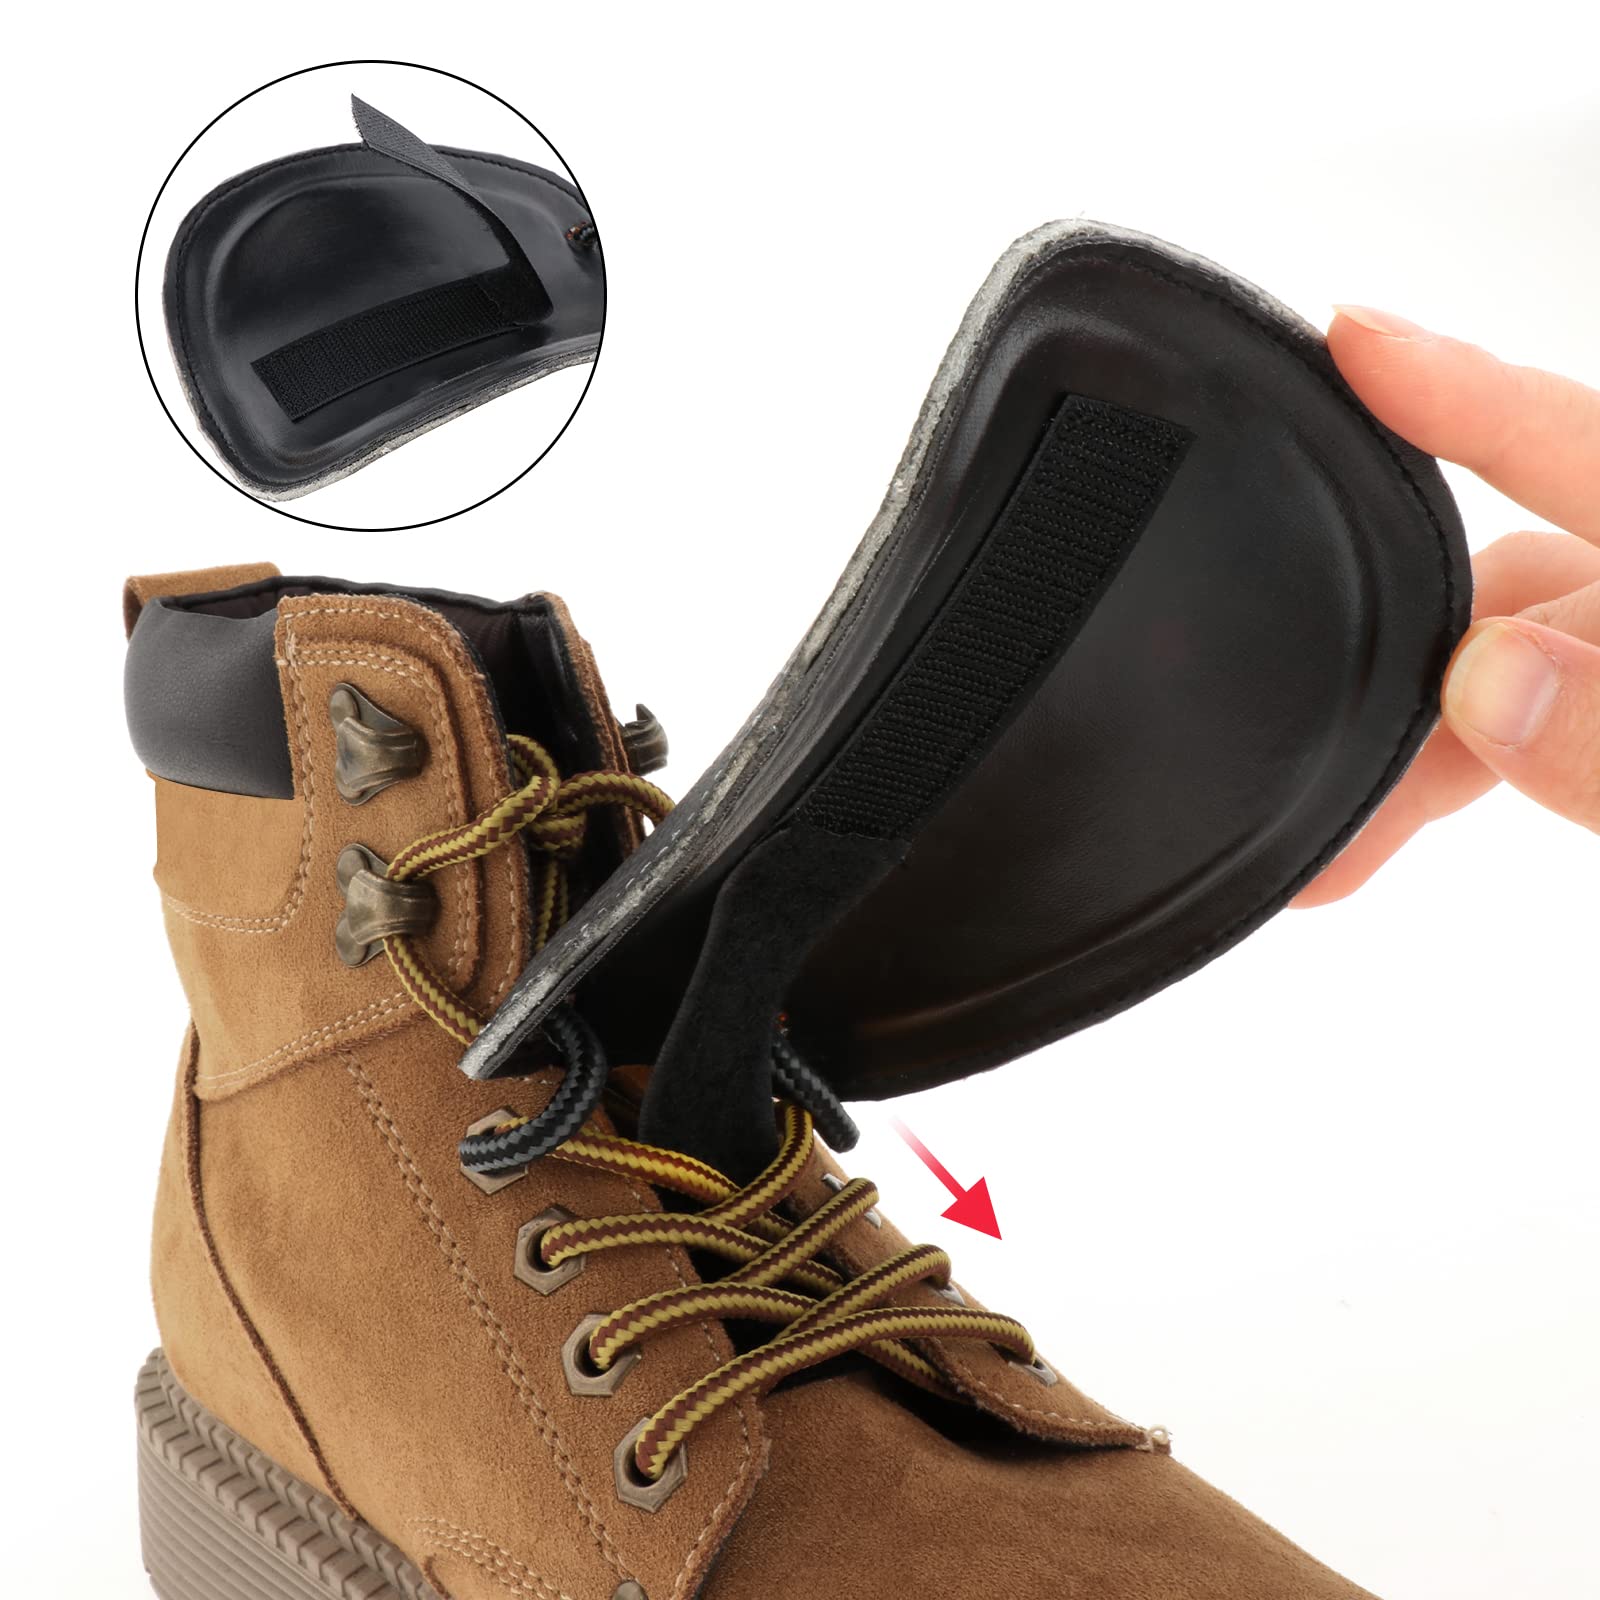 Gazechimp Metatarsal Guard Safety Footwear Attachment Shoe Cover